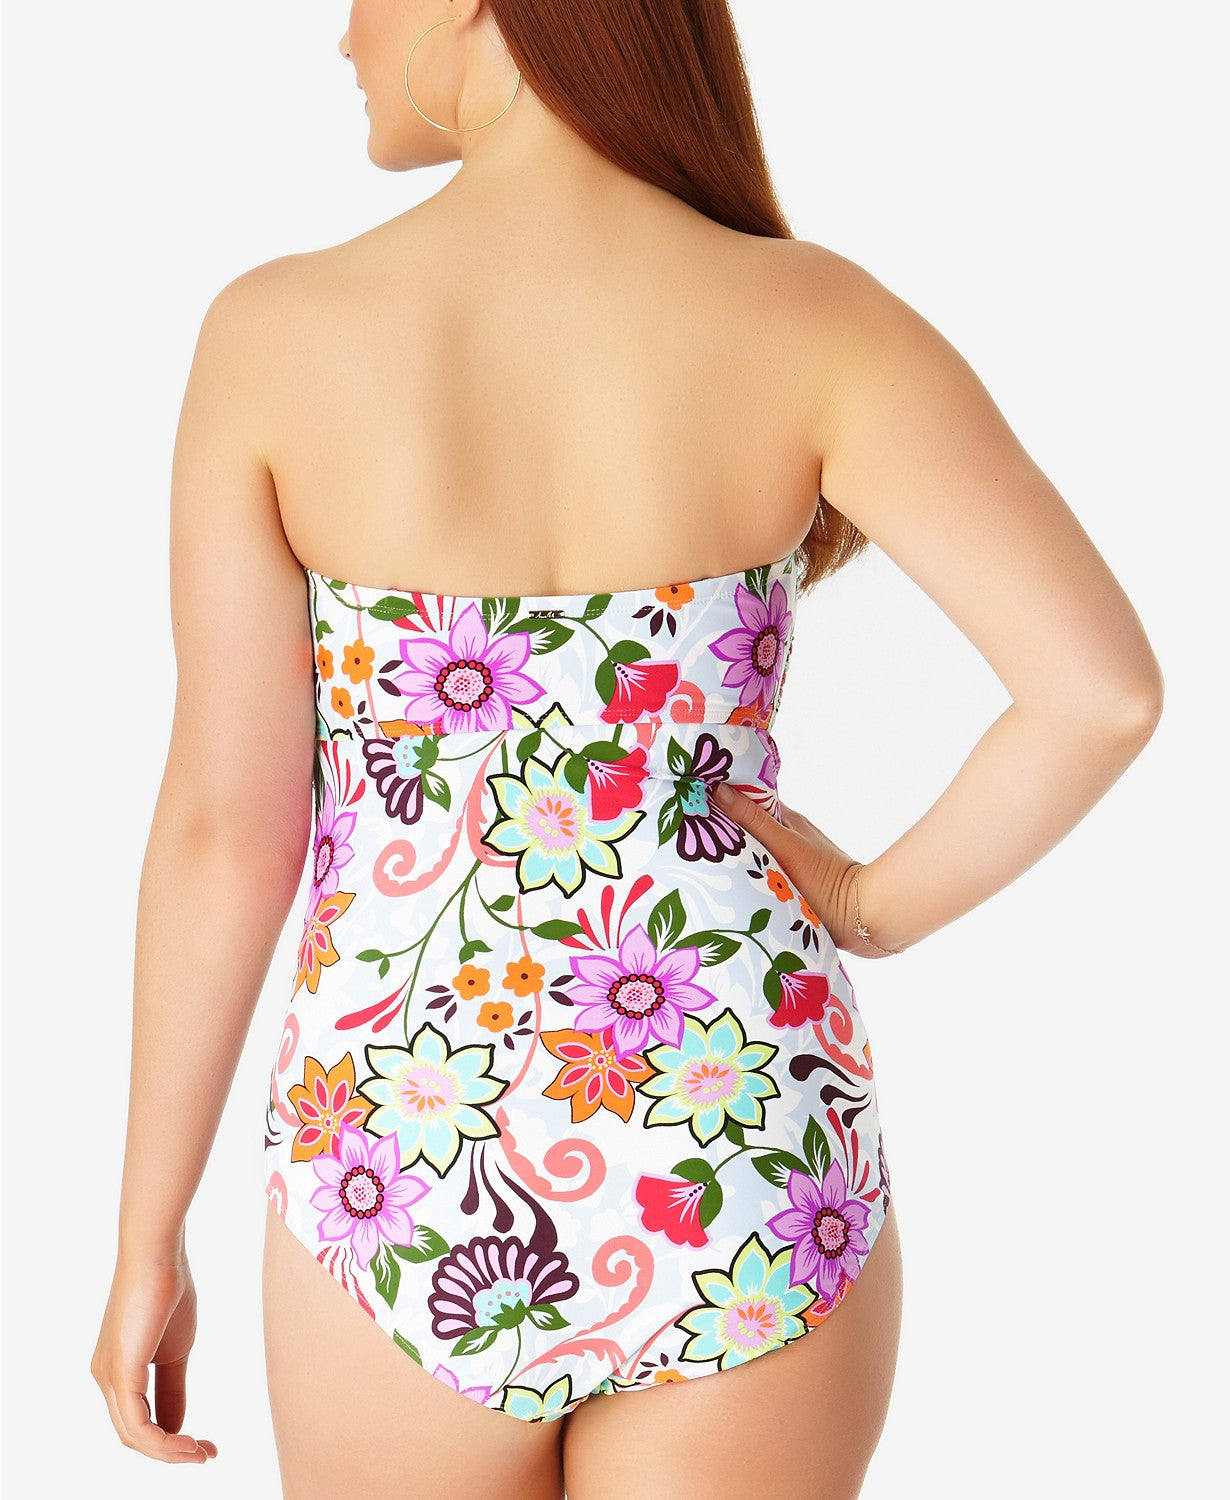 Fleetwood floral Swimsuit